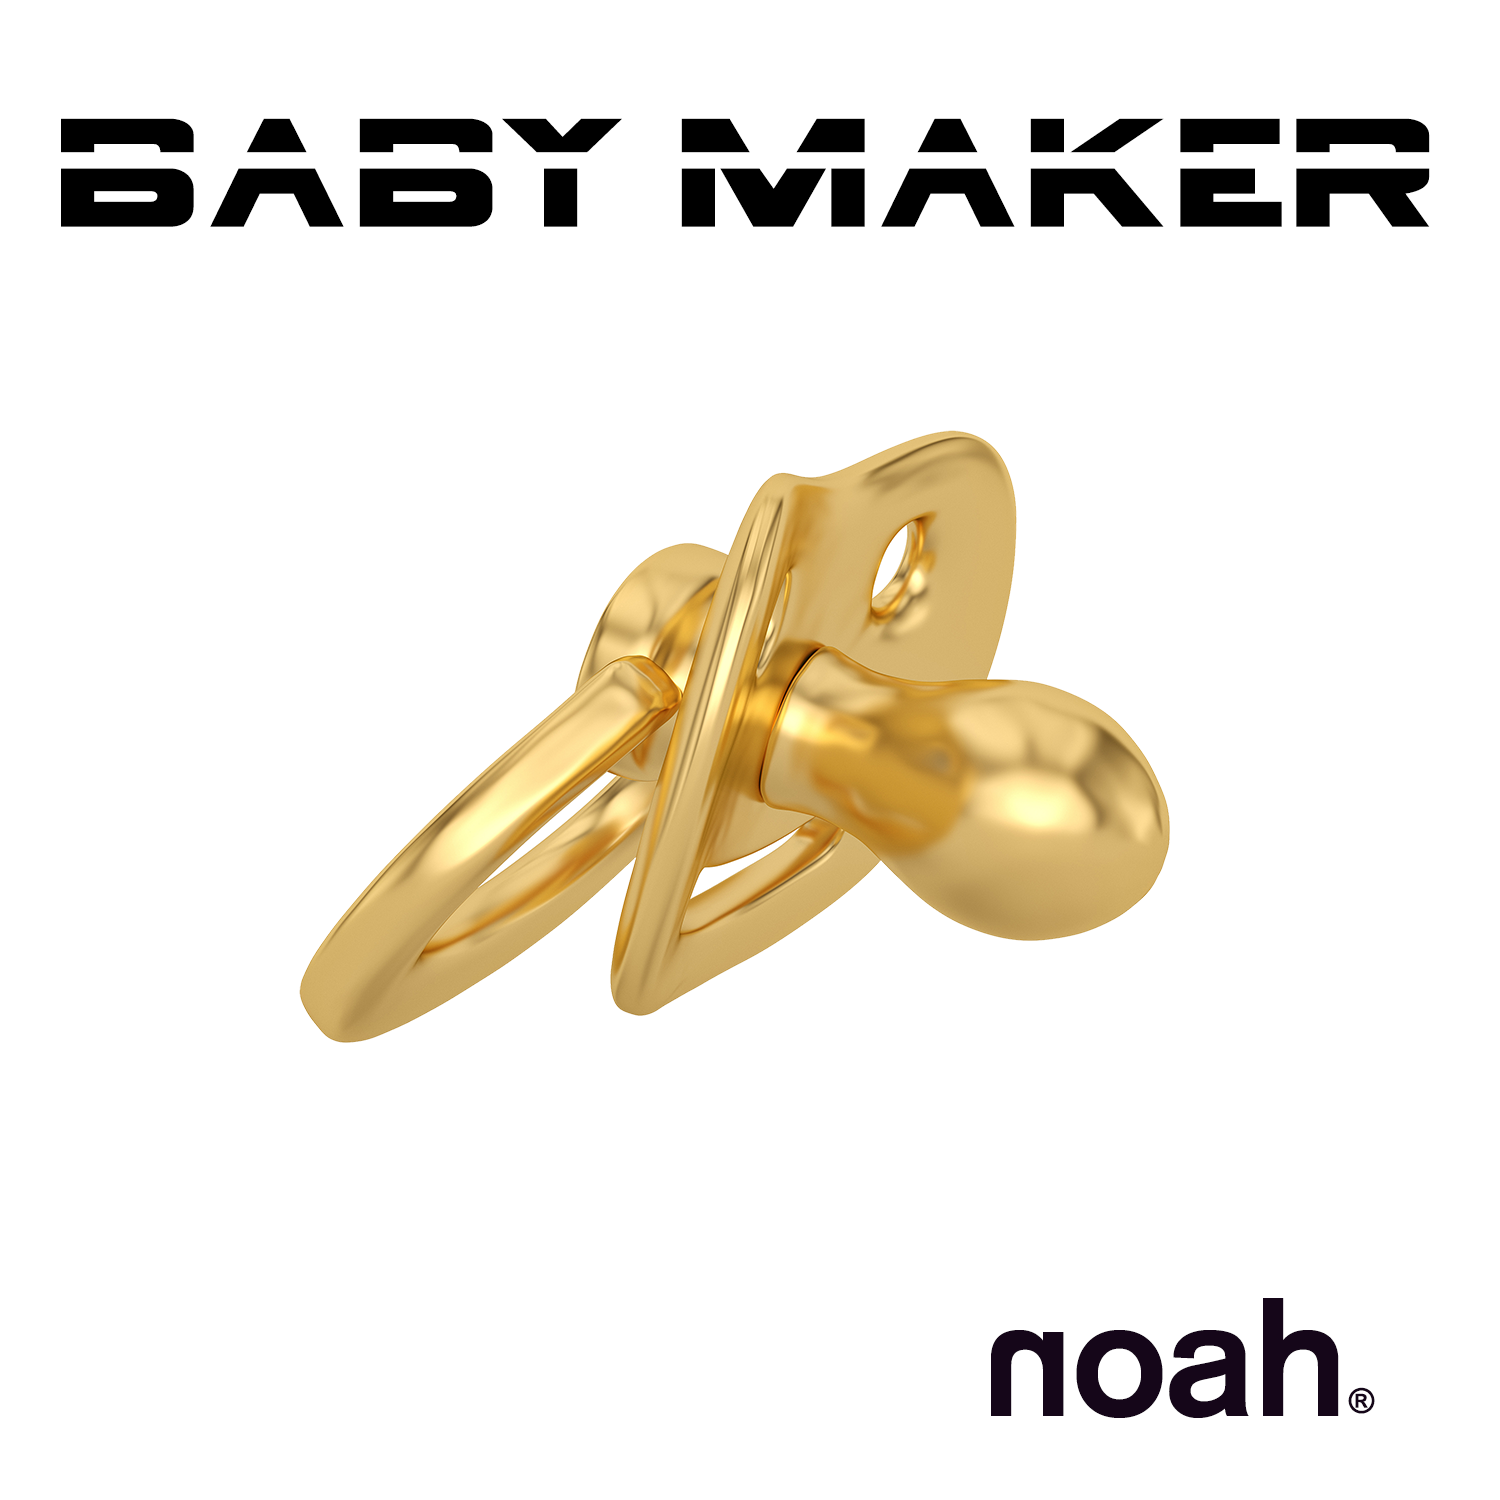 NOAH - BABYMAKER 1500 x 1500.png